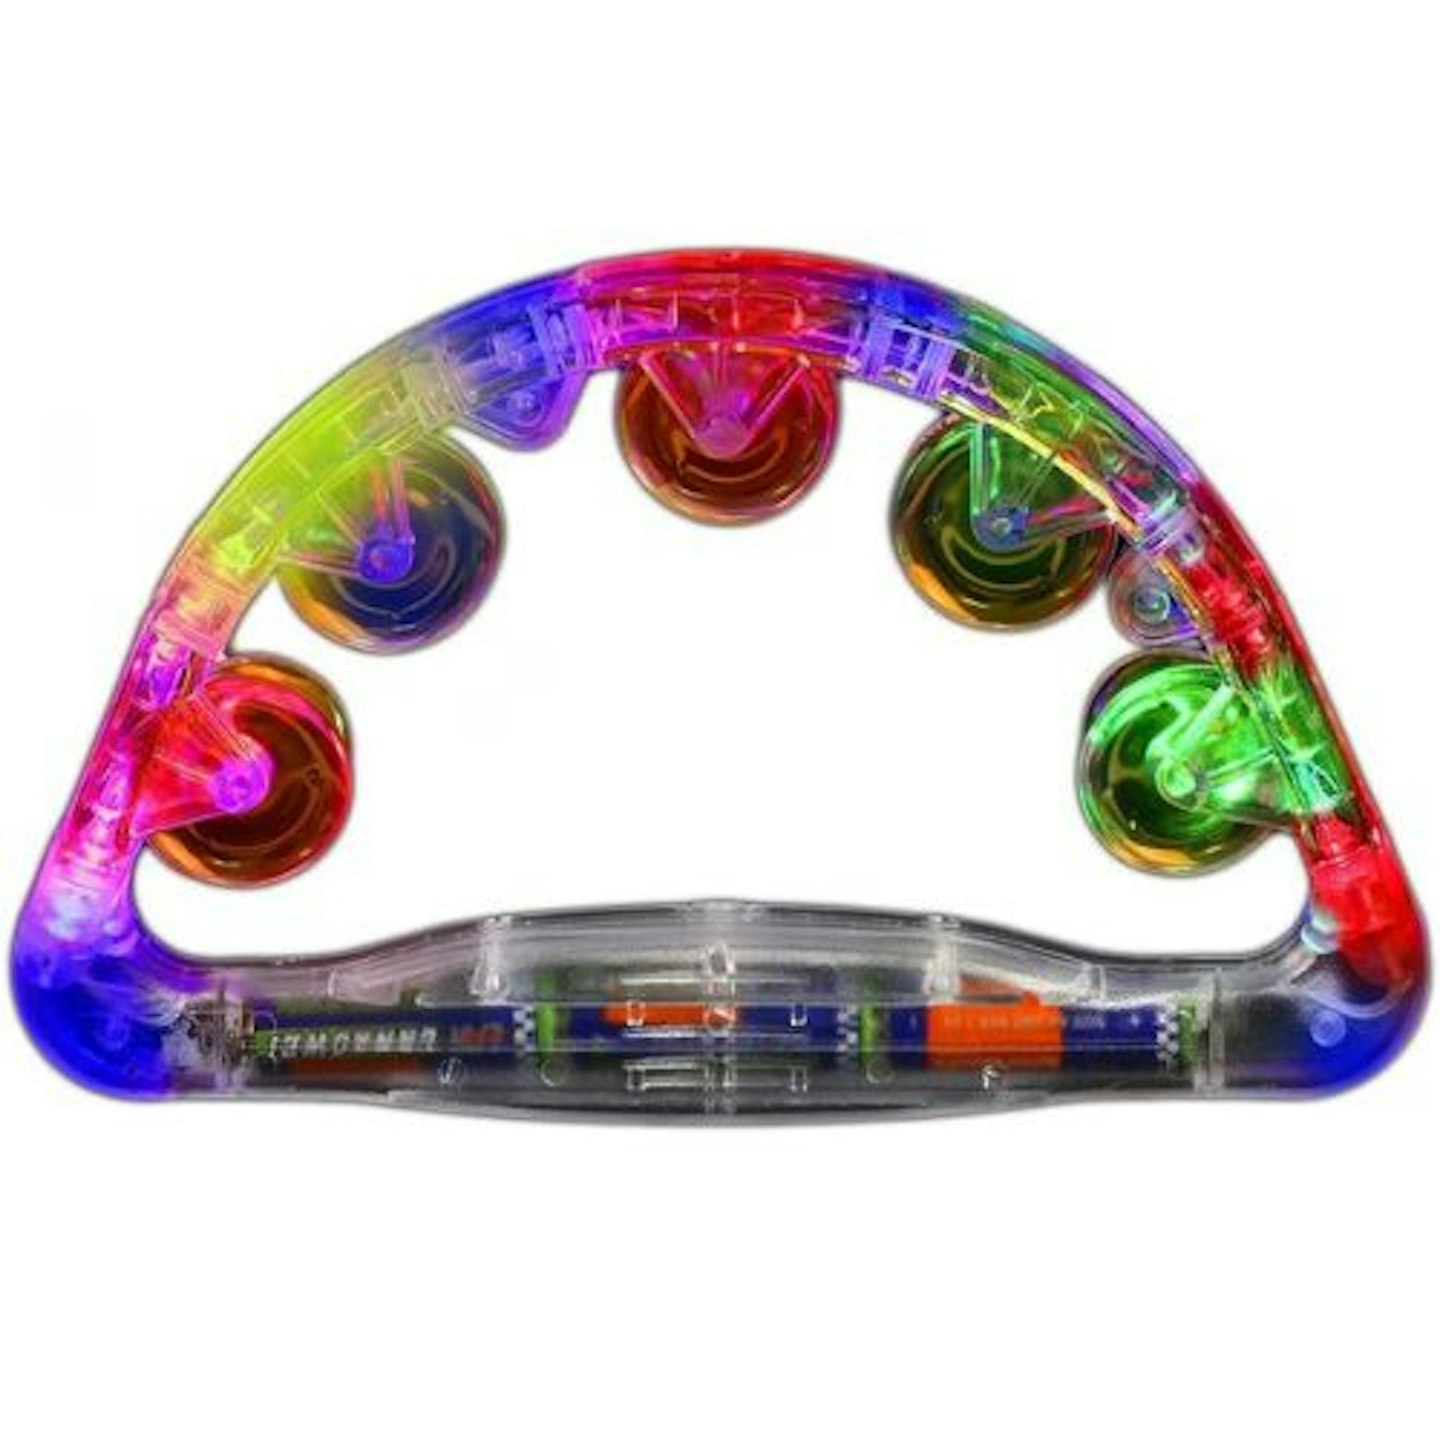 Baby sensory lights - The Glowhouse Flashing & Light up Tambourine